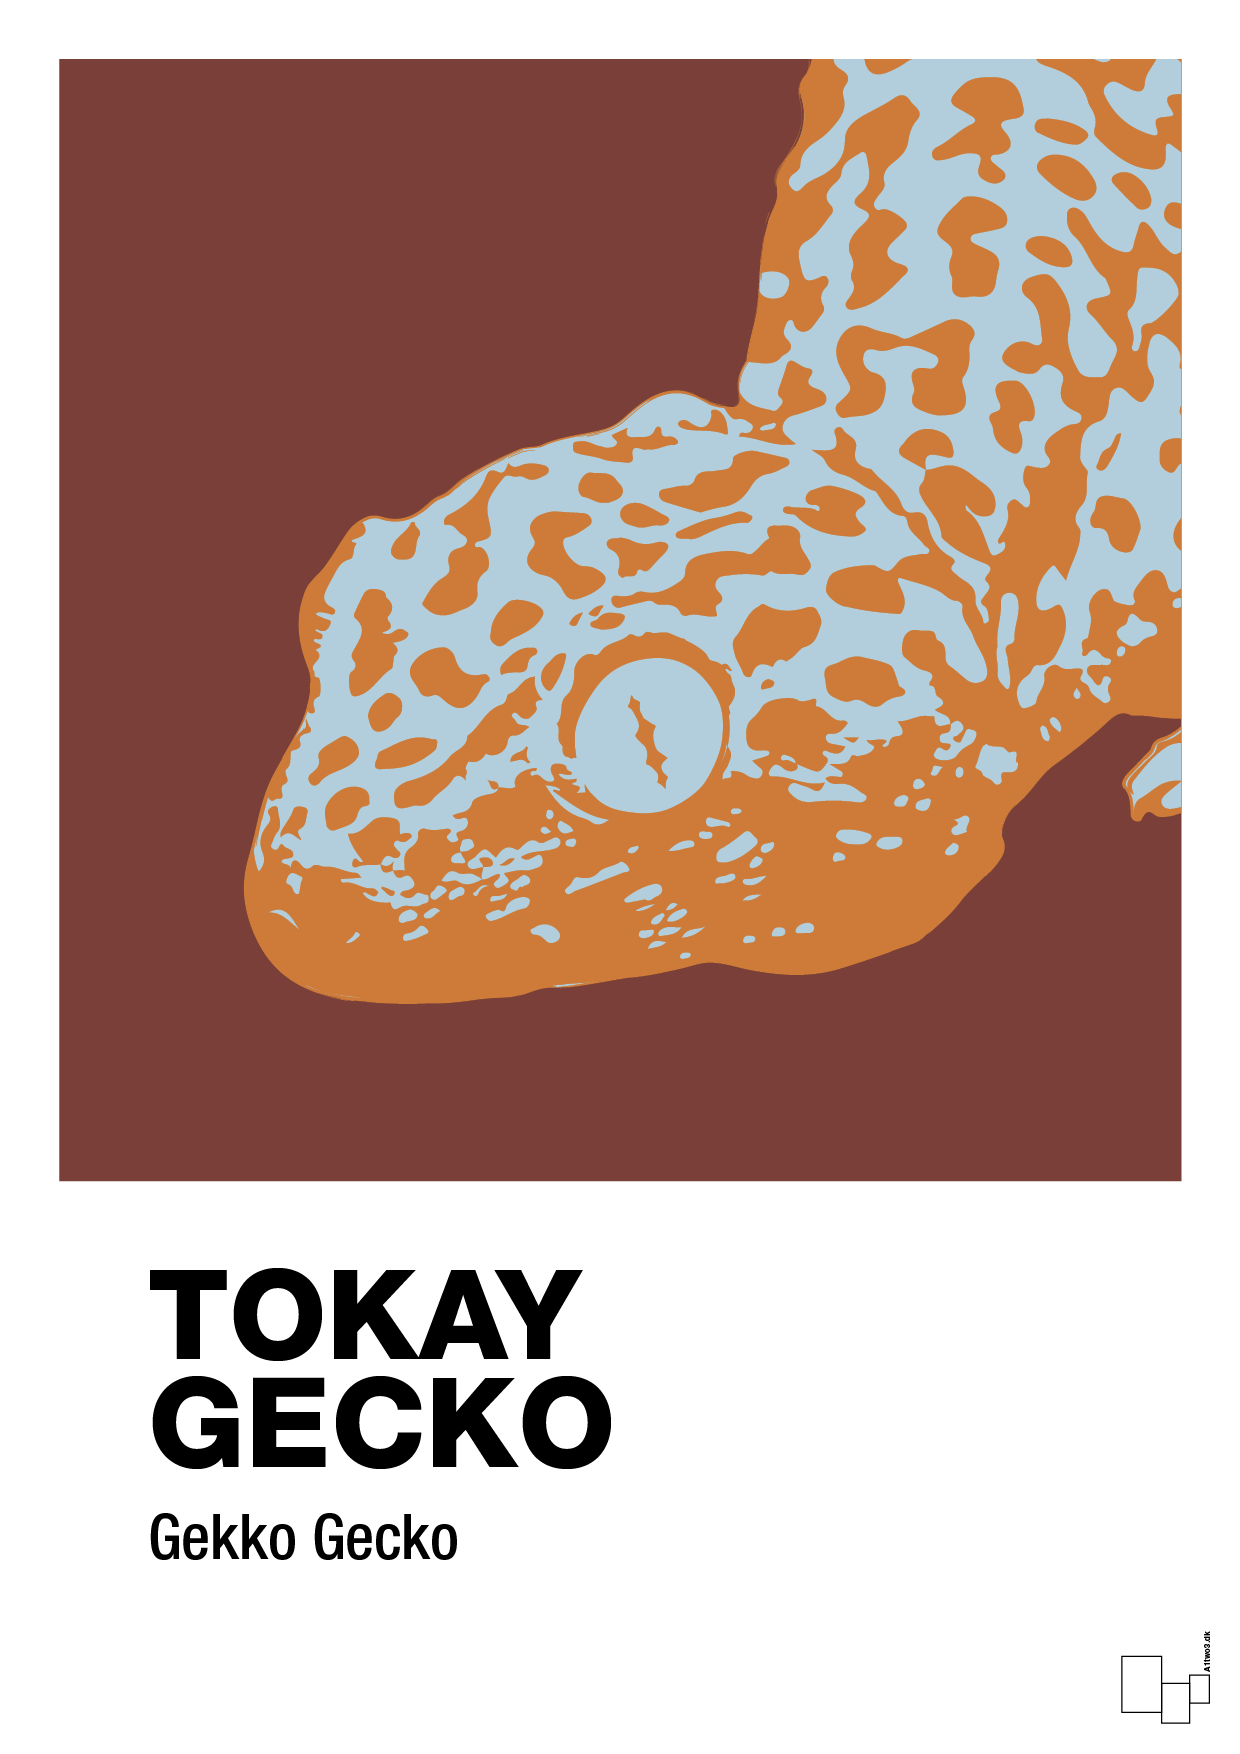 tokay gecko - Plakat med Videnskab i Red Pepper